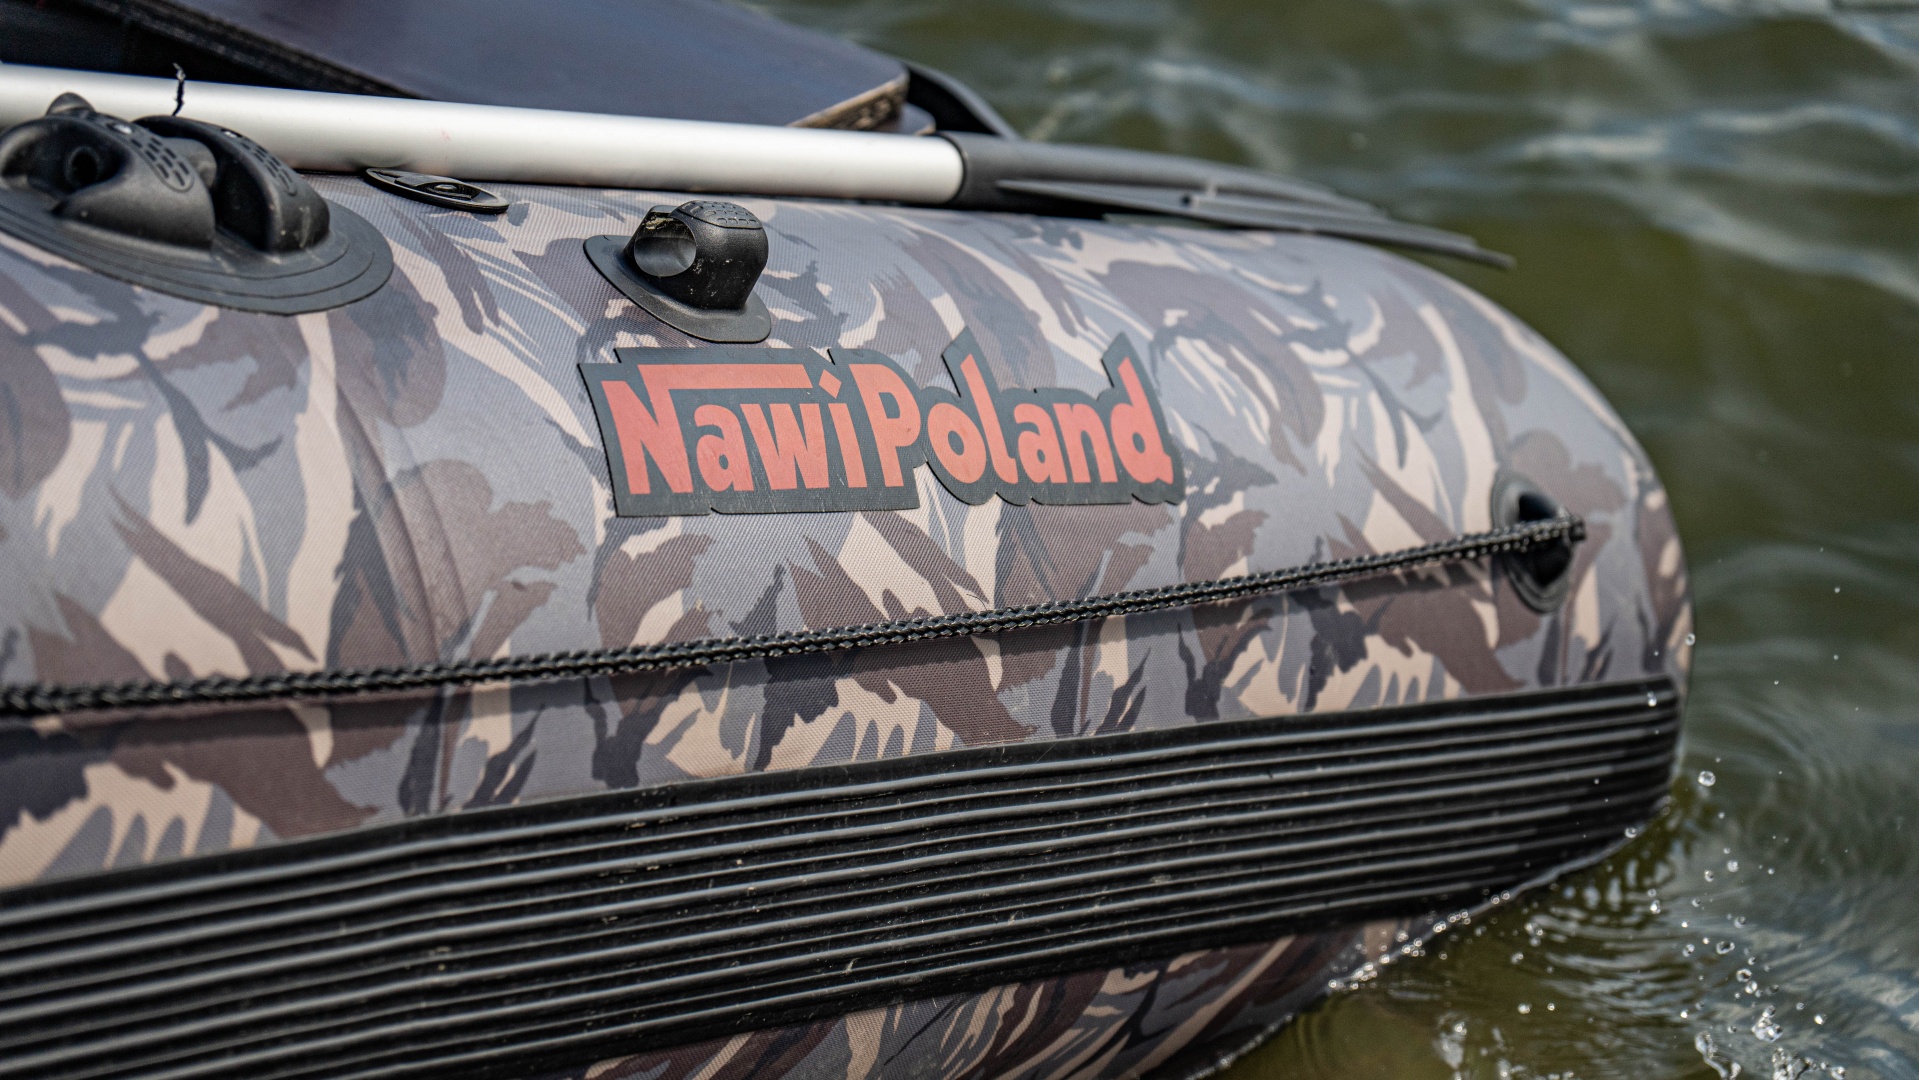 NawiPoland CAT 400 Inflatable Boat - Katamarán